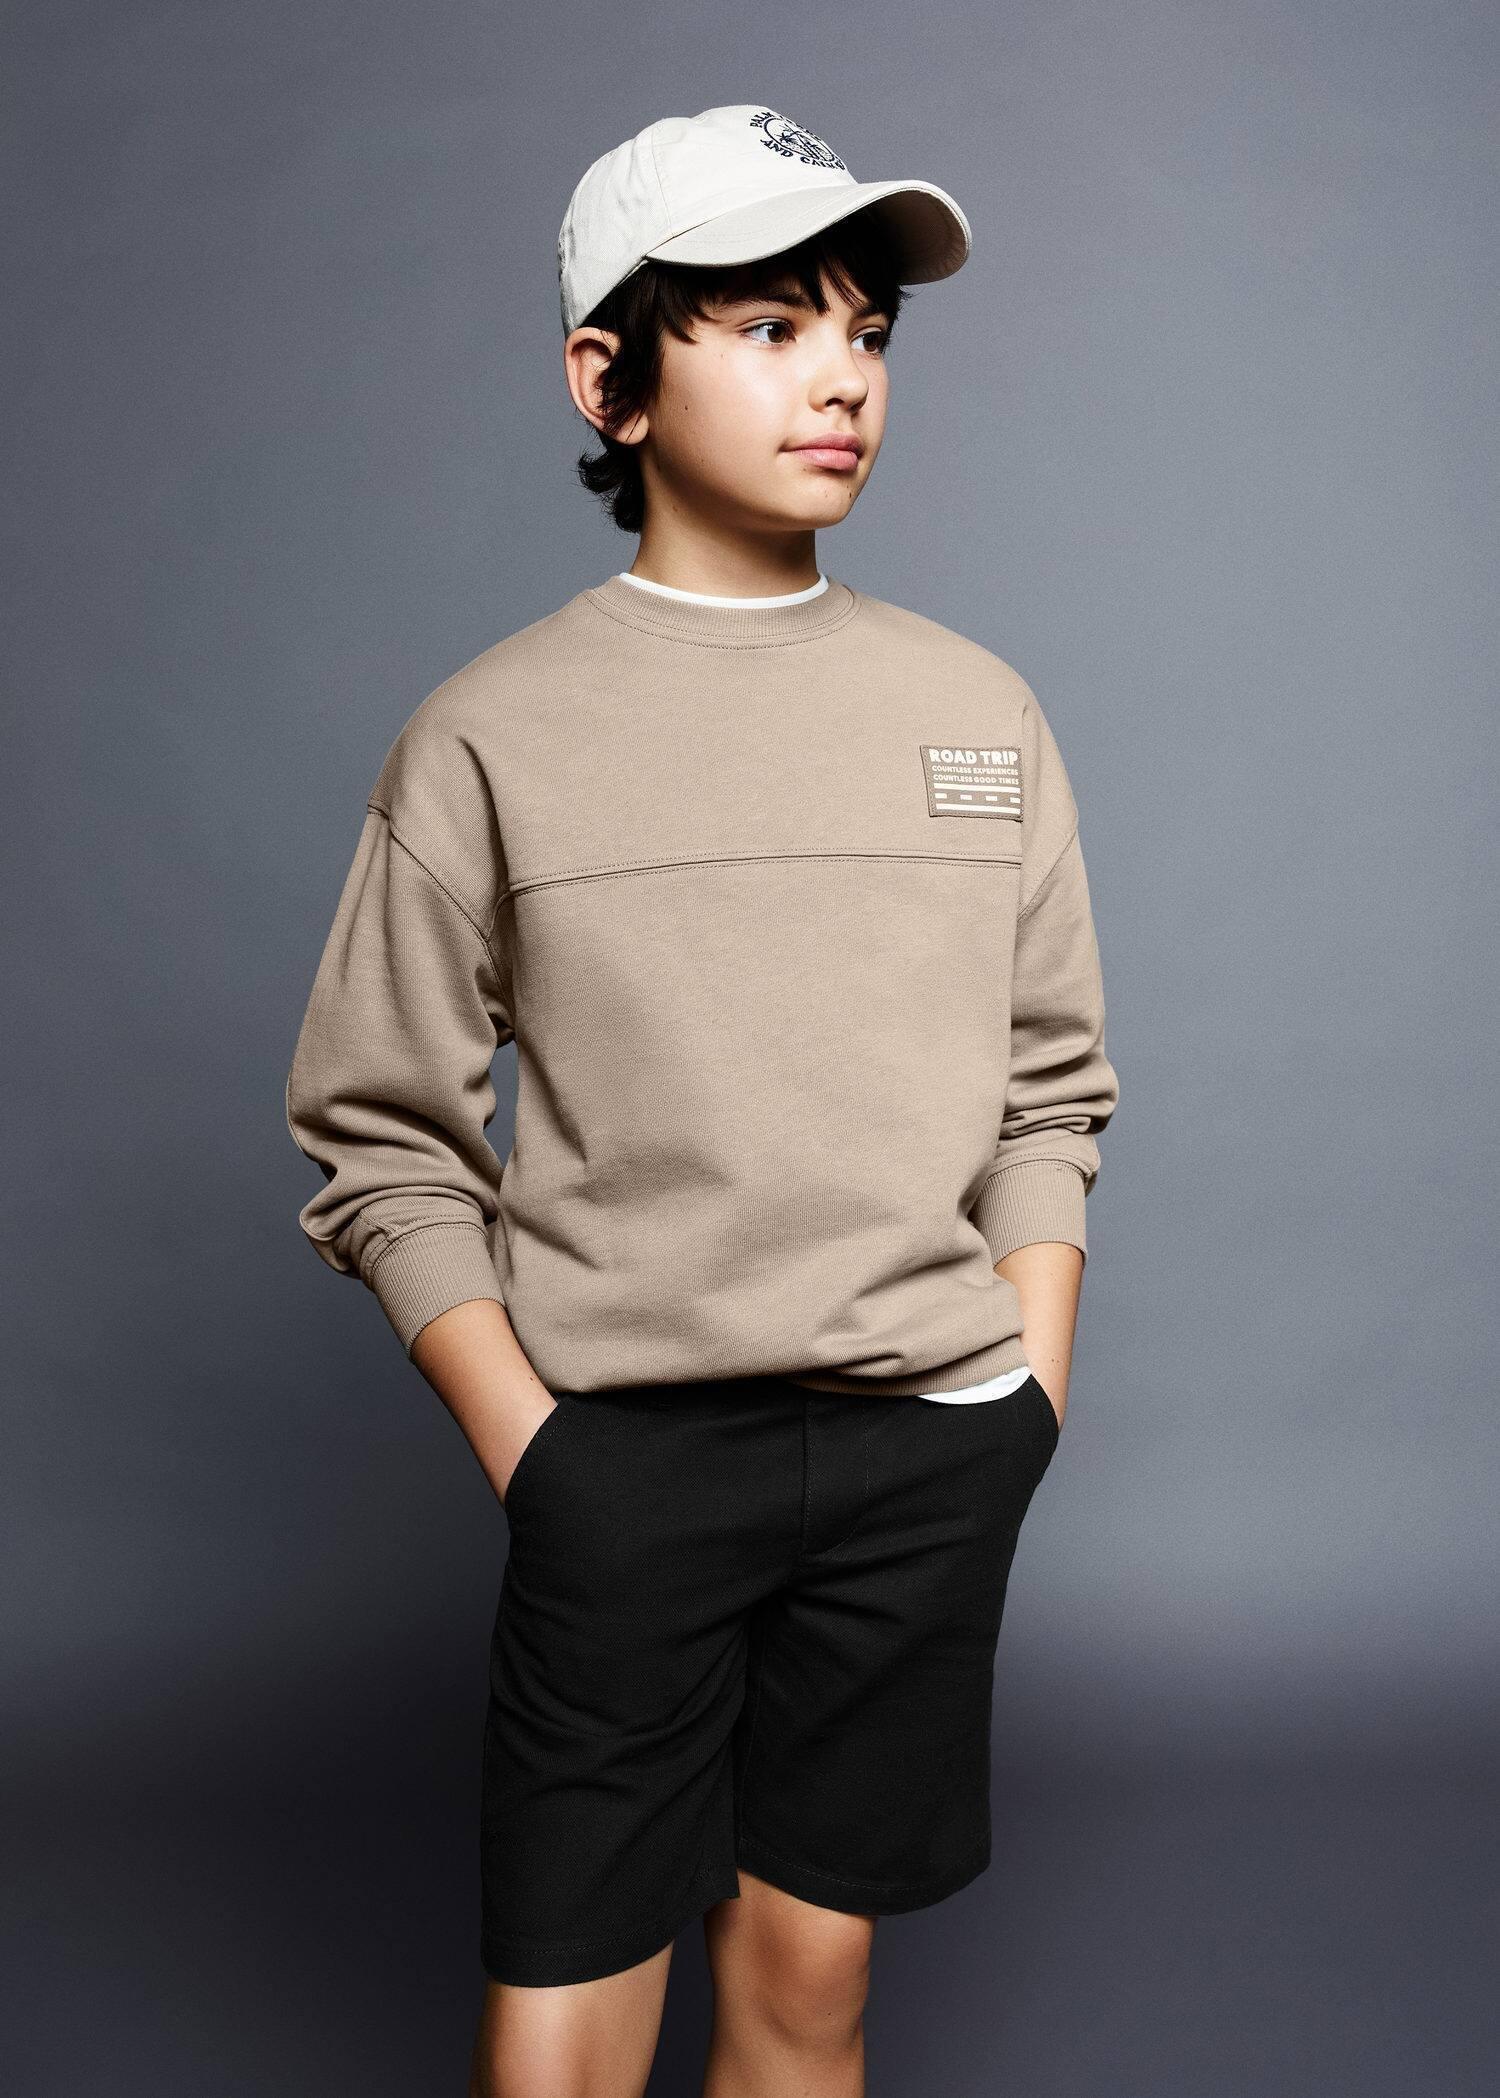 Mango - Brown Message Cotton Sweatshirt, Kids Boys